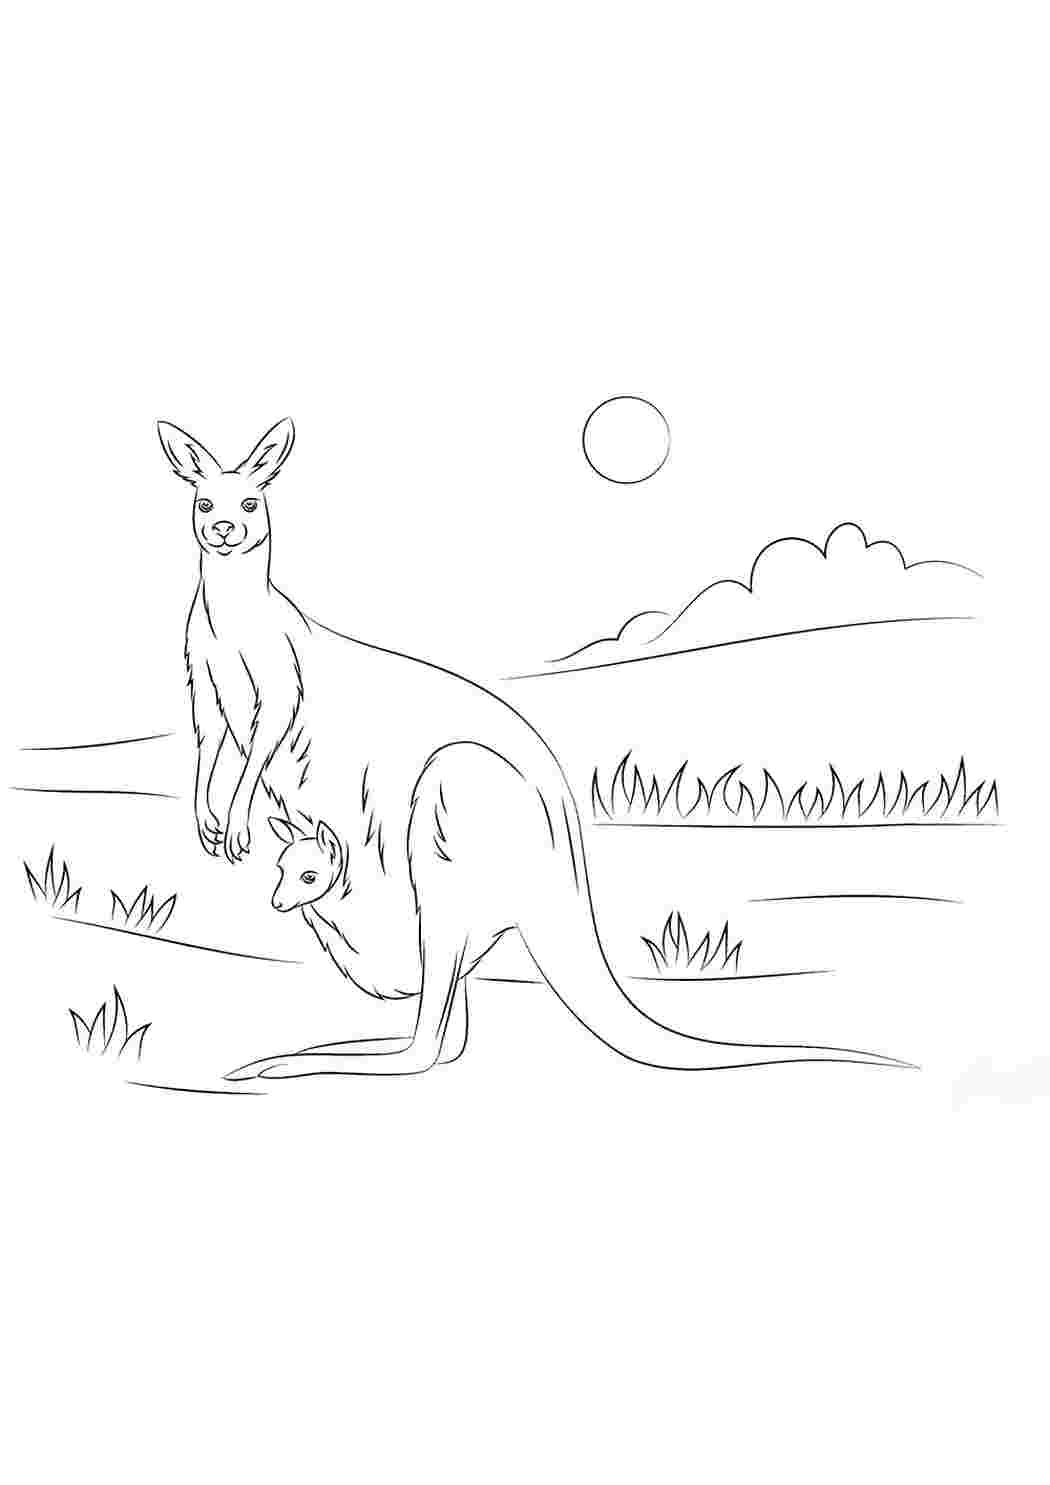 Как нарисовать кенгуренка на дереве и белку